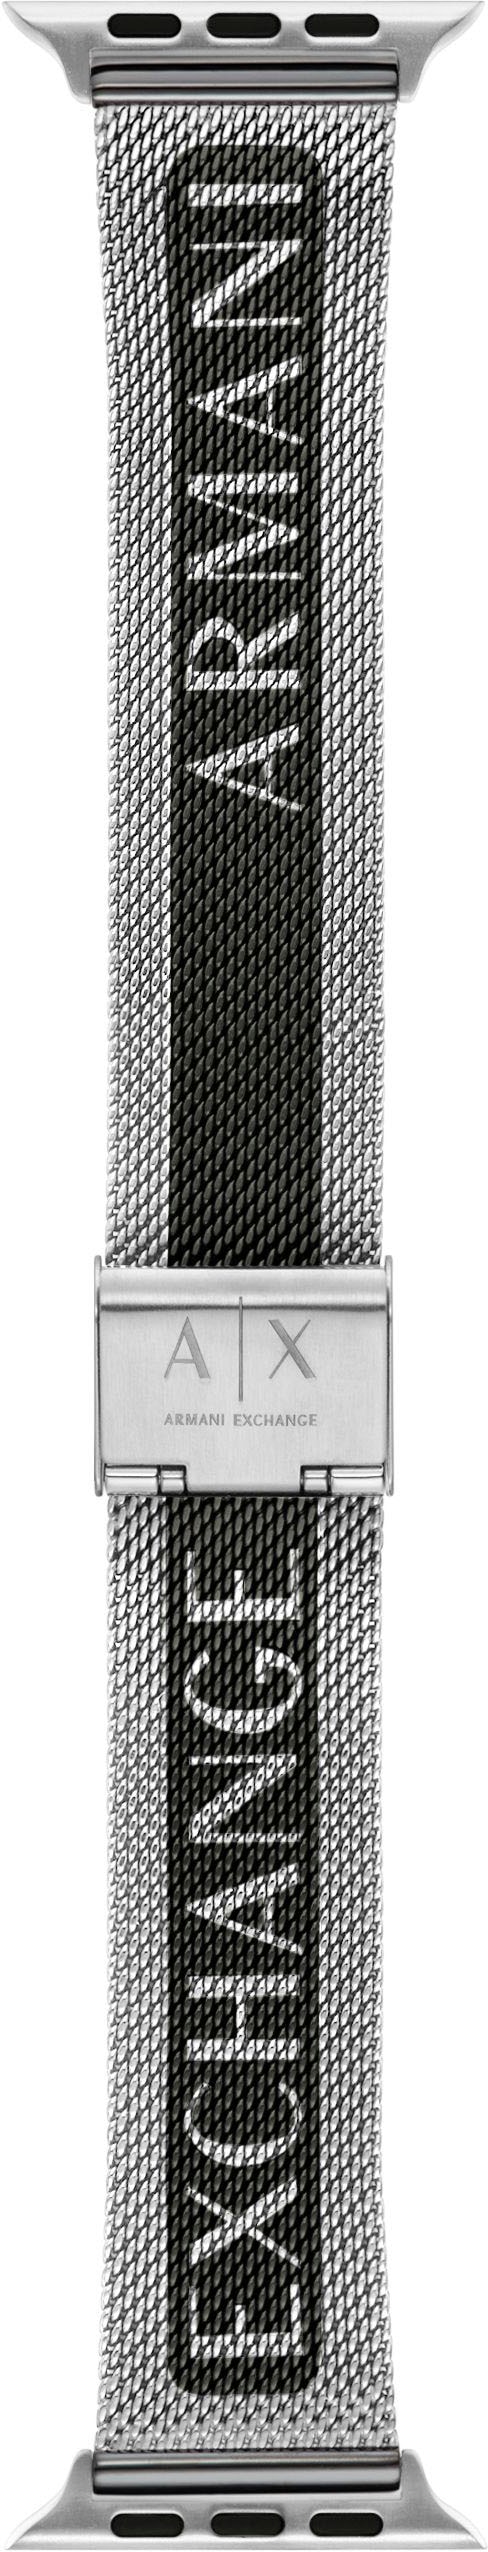 Smartwatch-Armband »APPLE BAND, AXS8029«, Wechselarmband, Ersatzarmband, passend für...